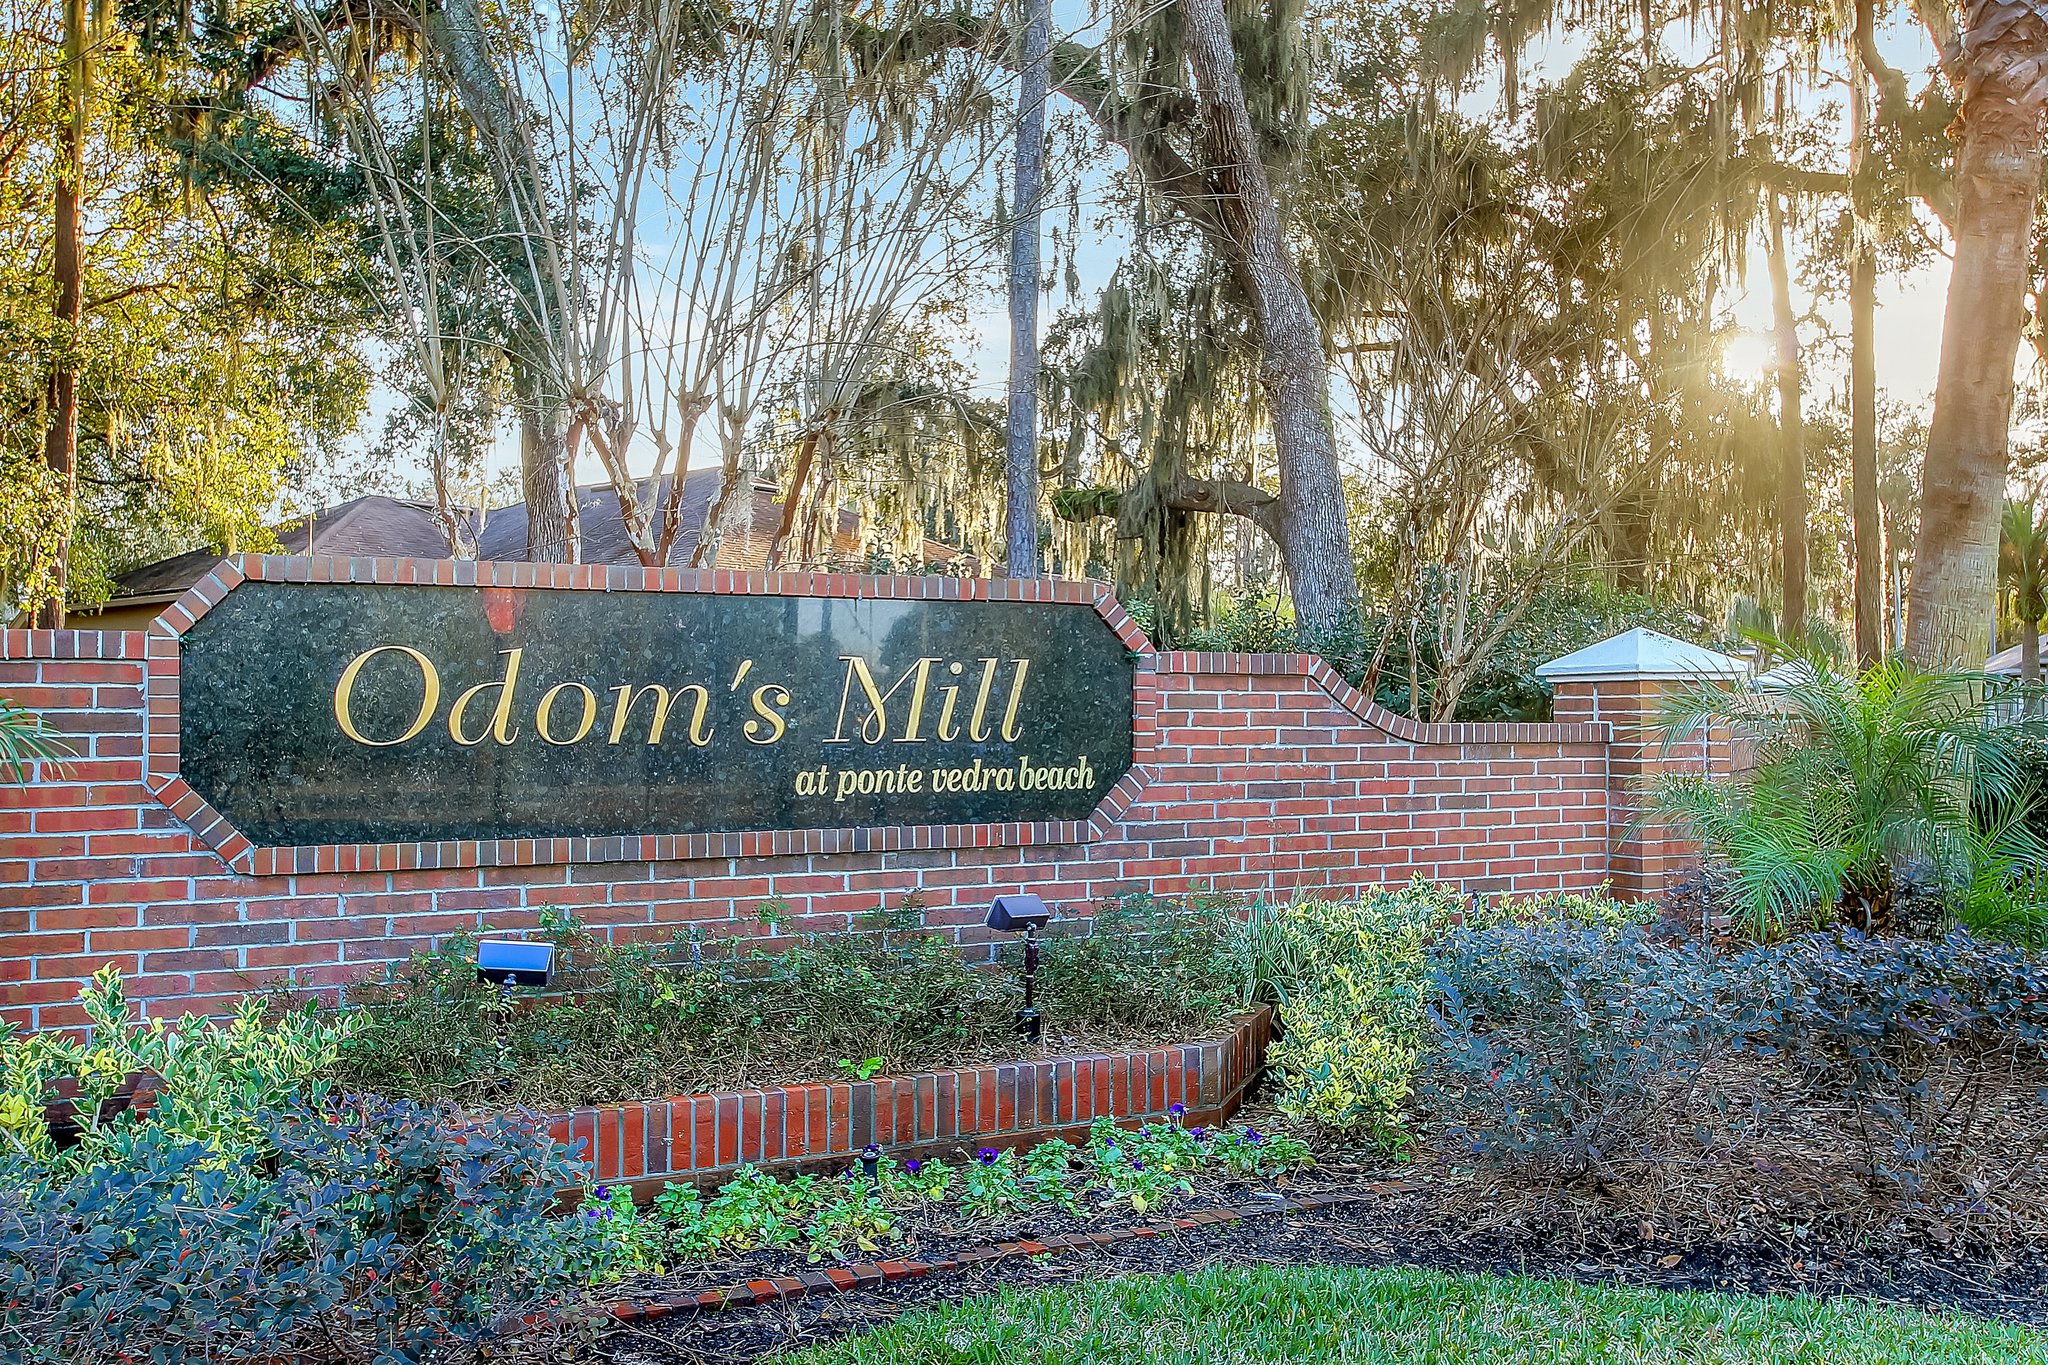 Odum's Mill